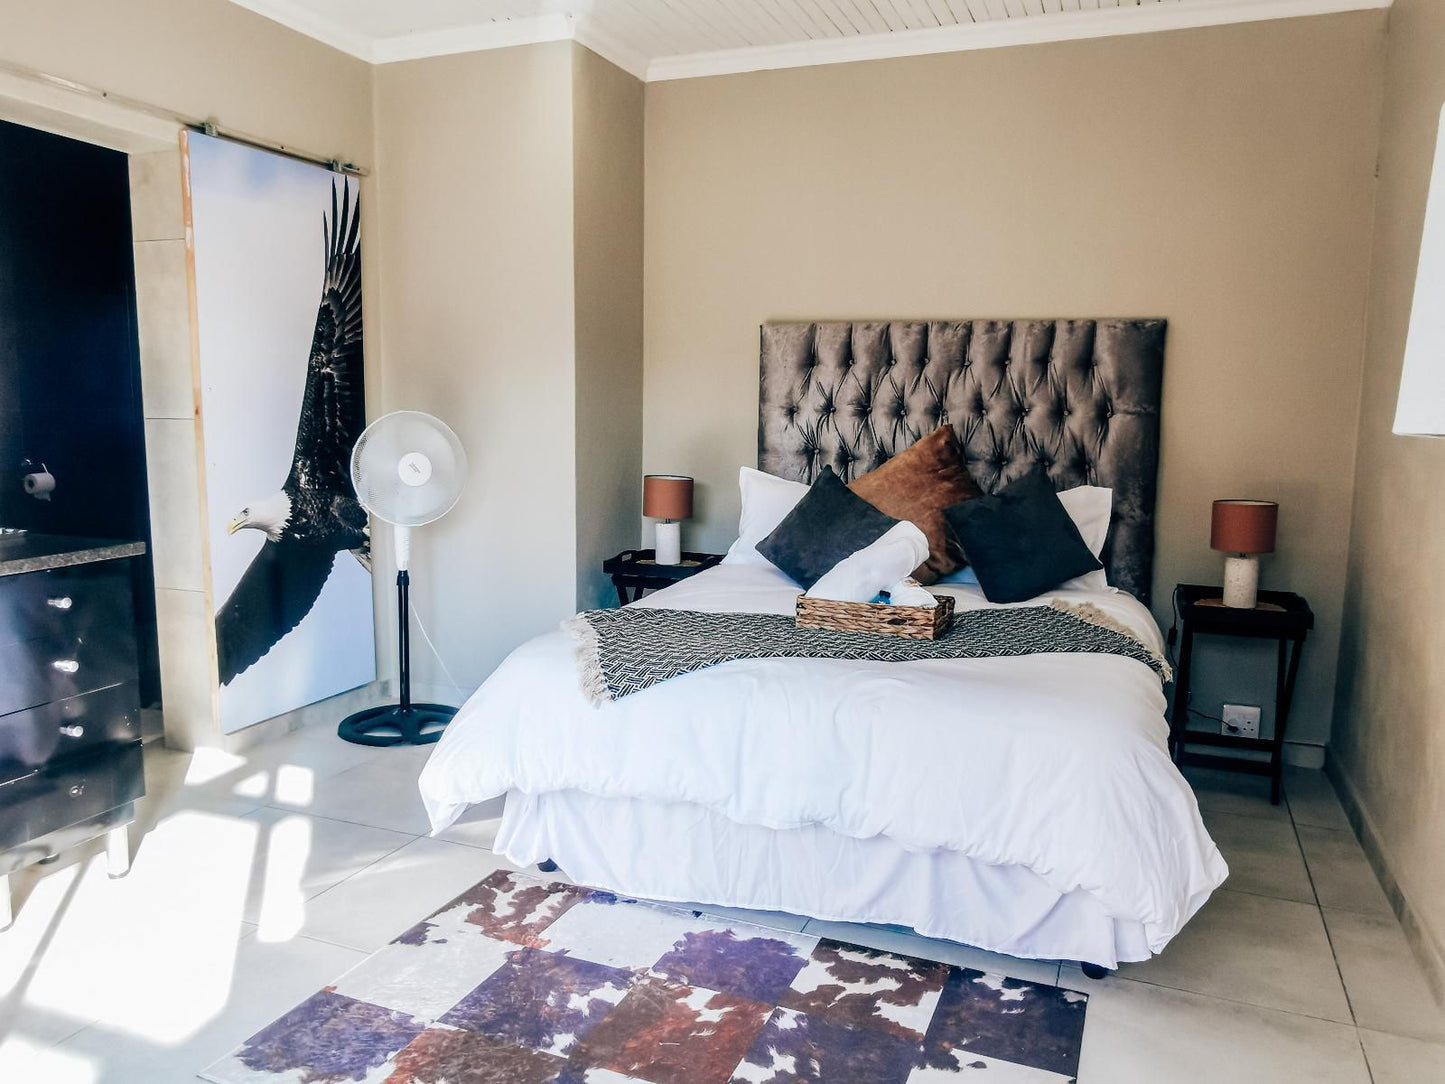 Bosveld In Die Stad 2 Randhart Johannesburg Gauteng South Africa Bedroom